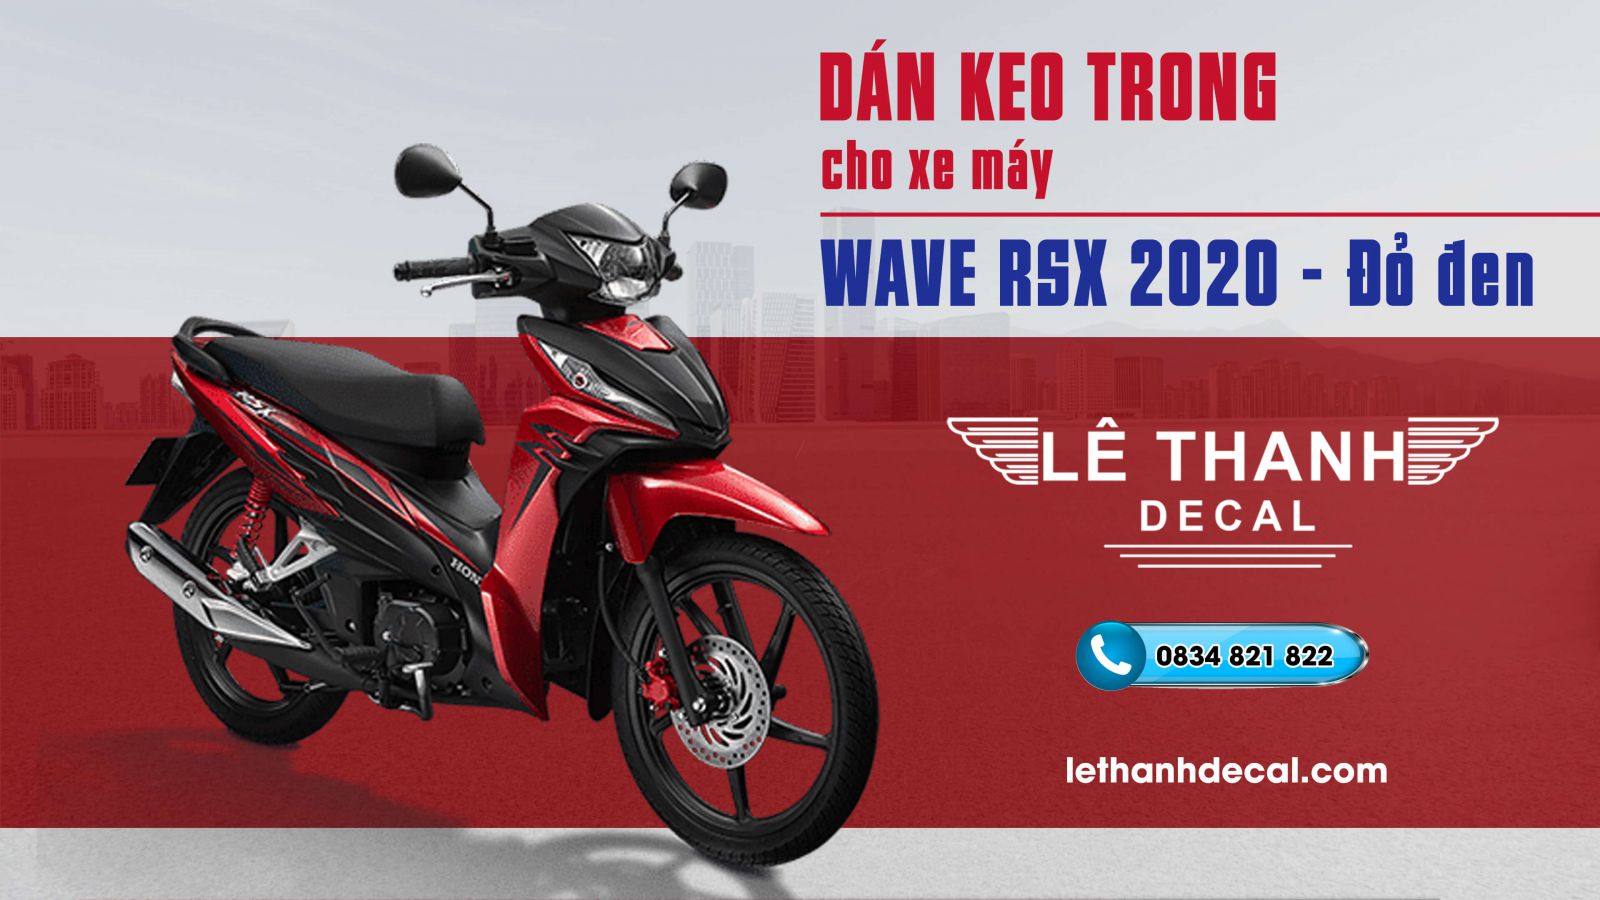 Honda Wave RSX 110i 2021  Mâm Đĩa Xanh Đen  Revo 2021 Deep Blue   Walkaround  YouTube